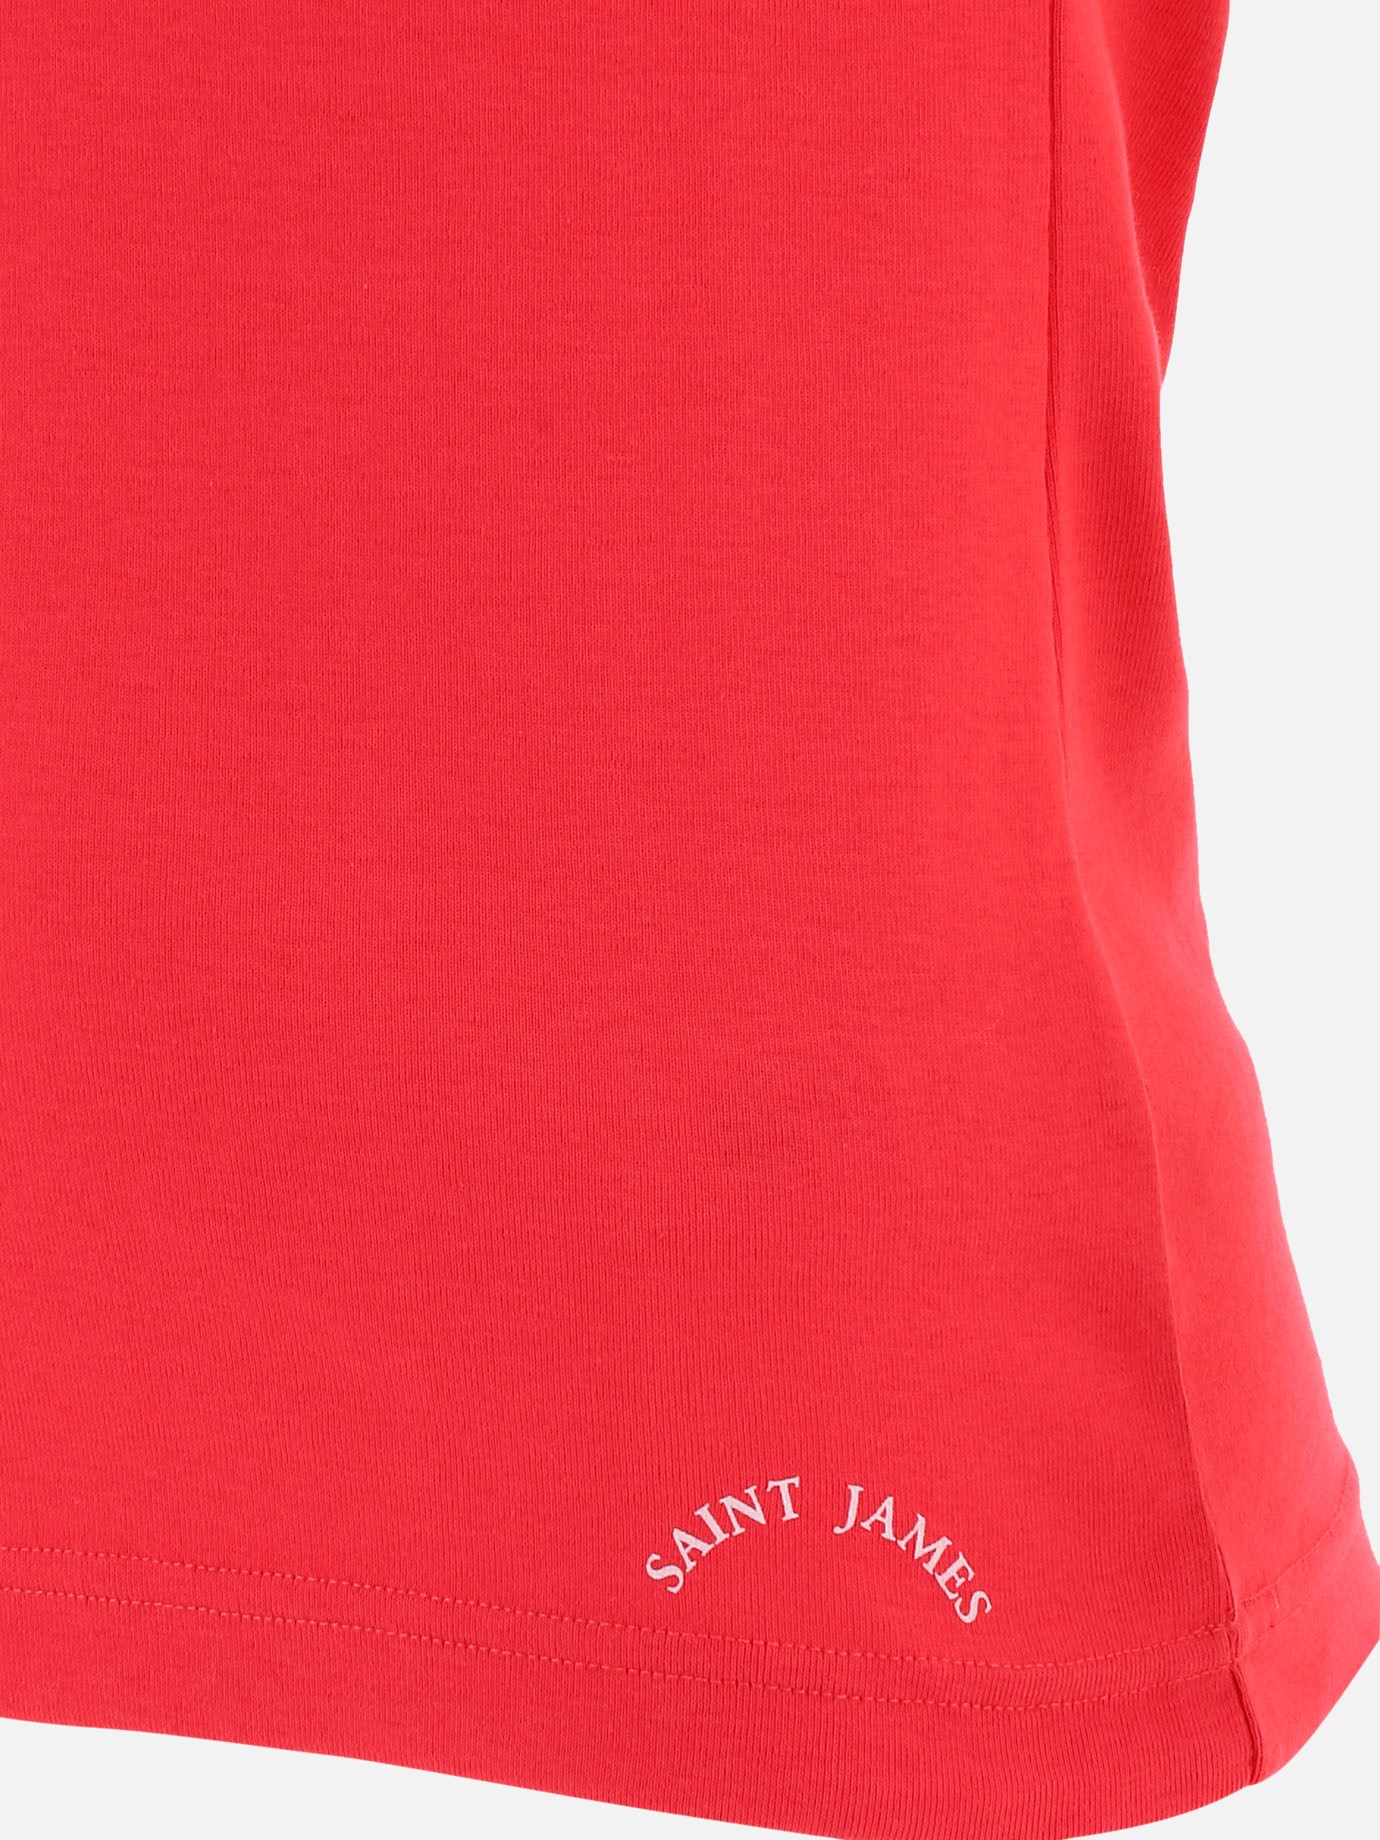  Ajaccio II  t-shirt by Saint James